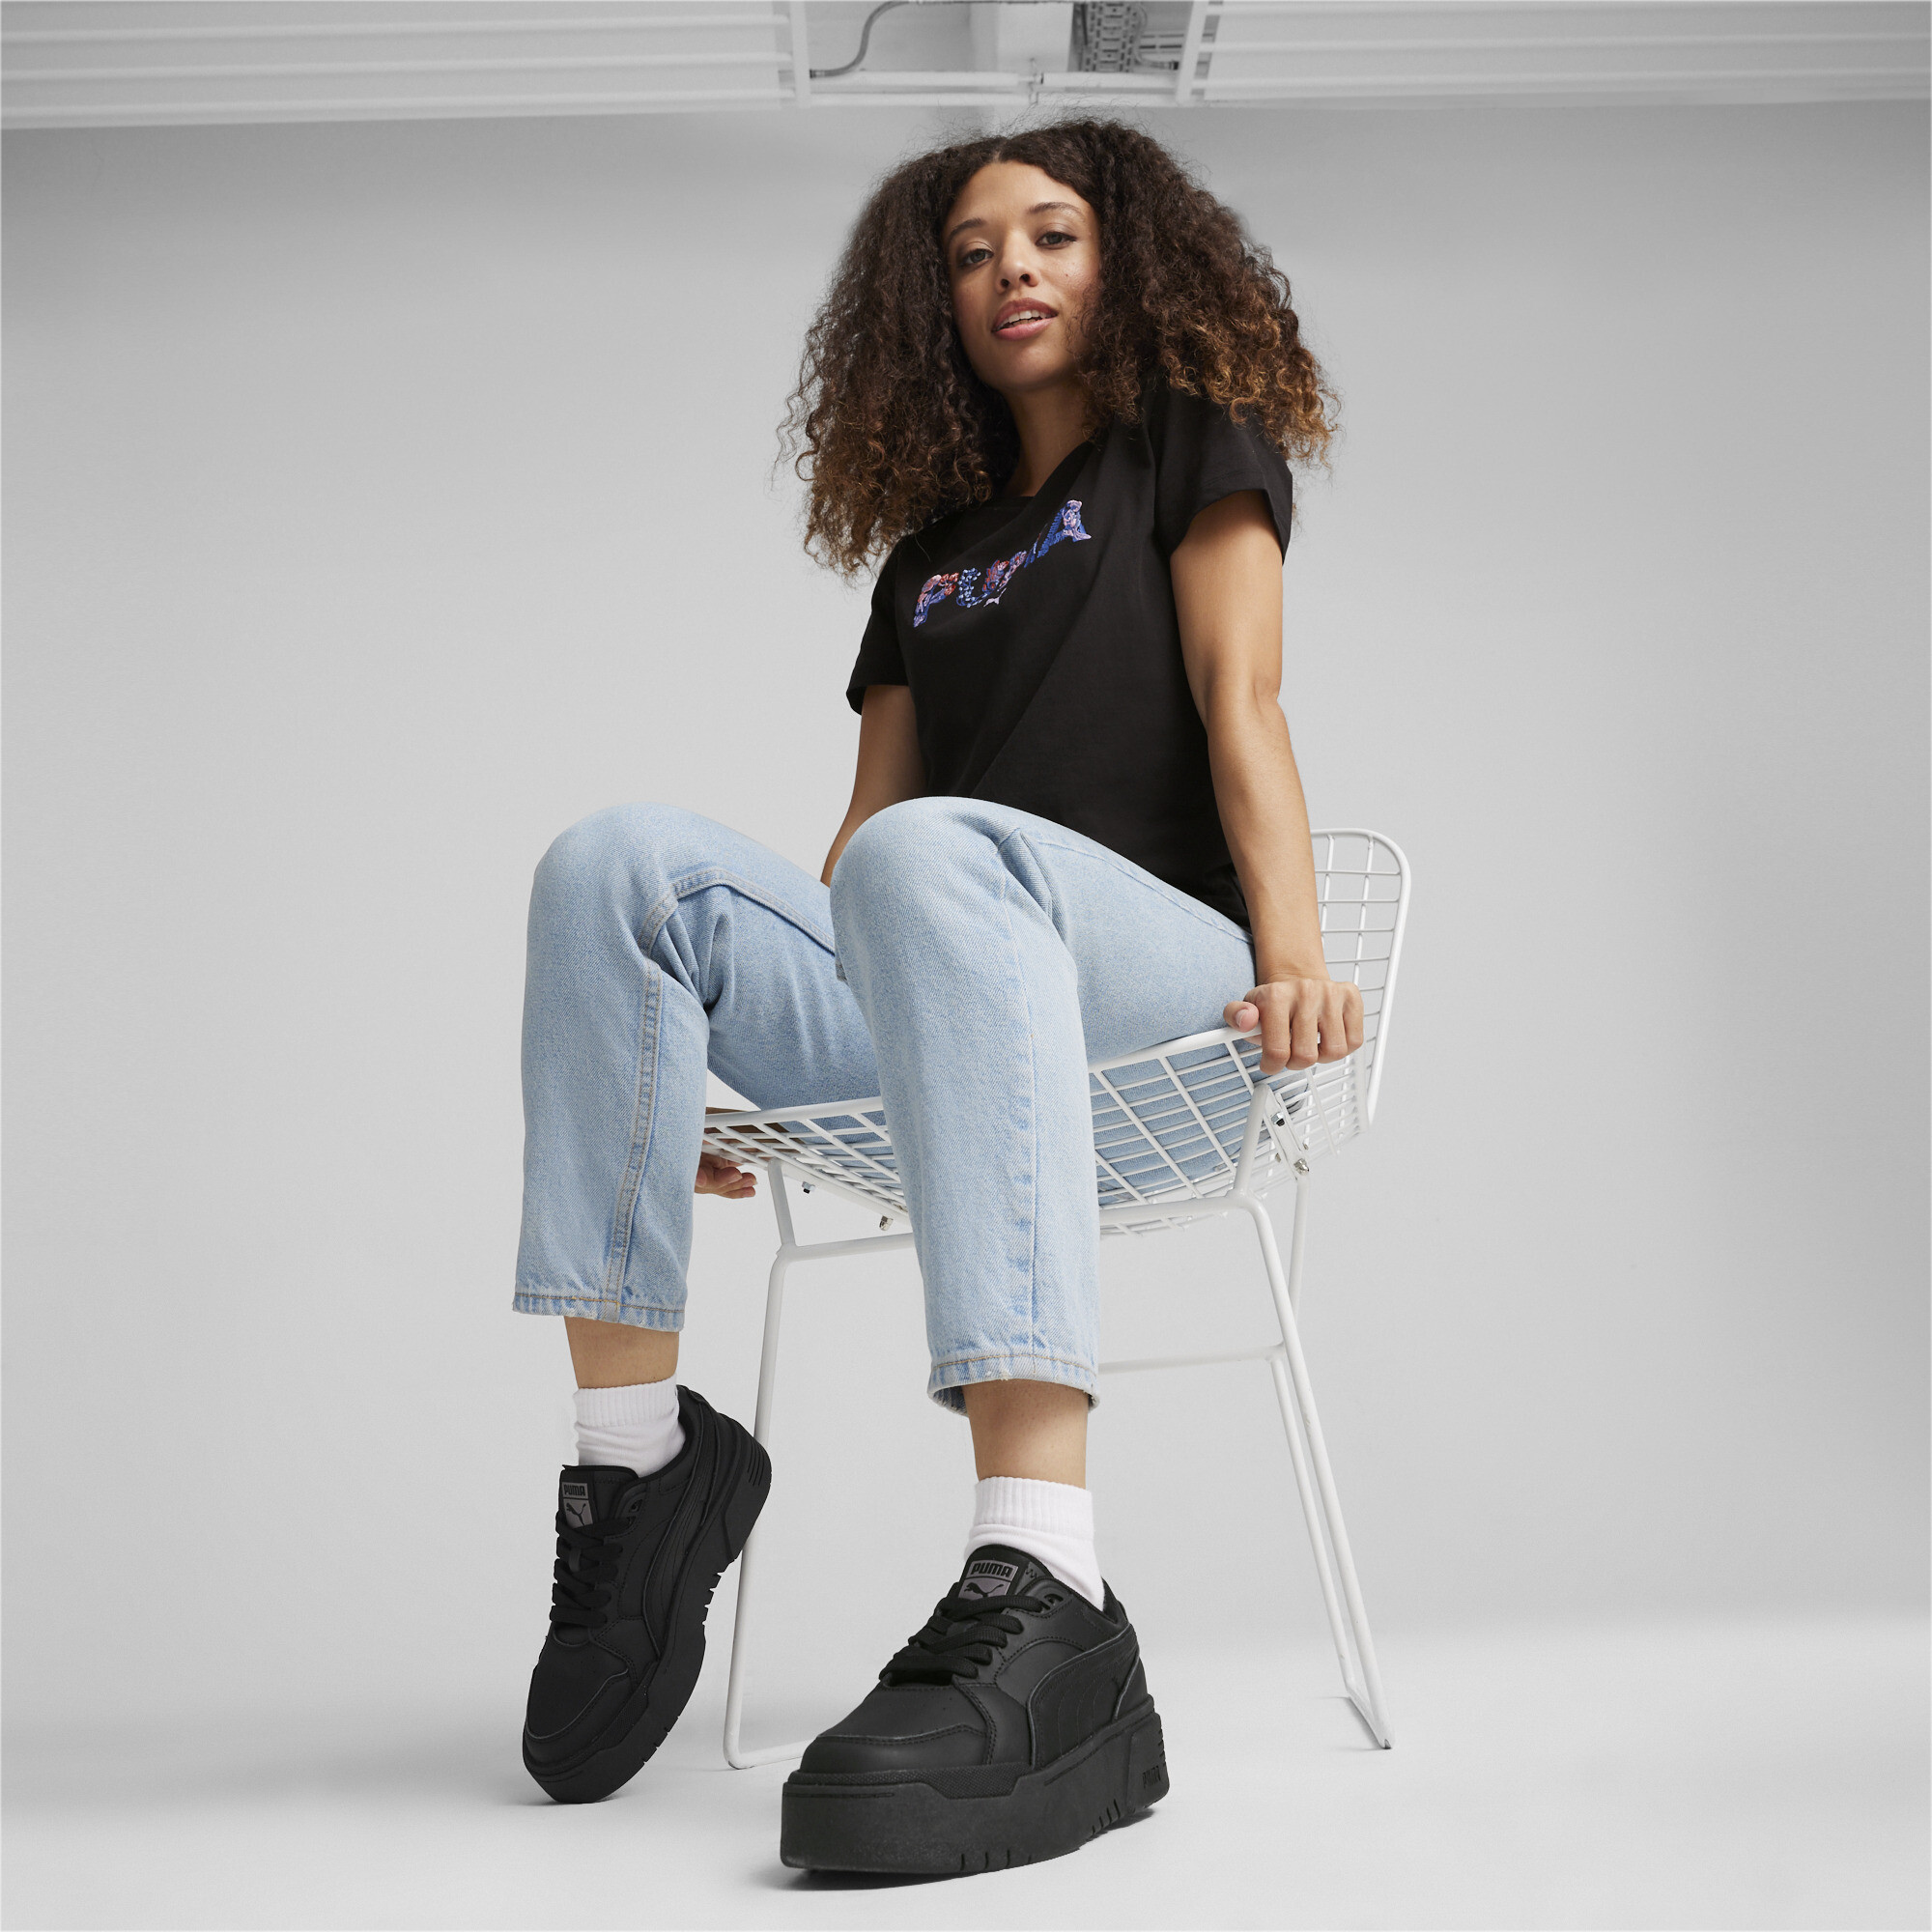 Women's Puma CA. Flyz's Sneakers, Black, Size 36, Shoes